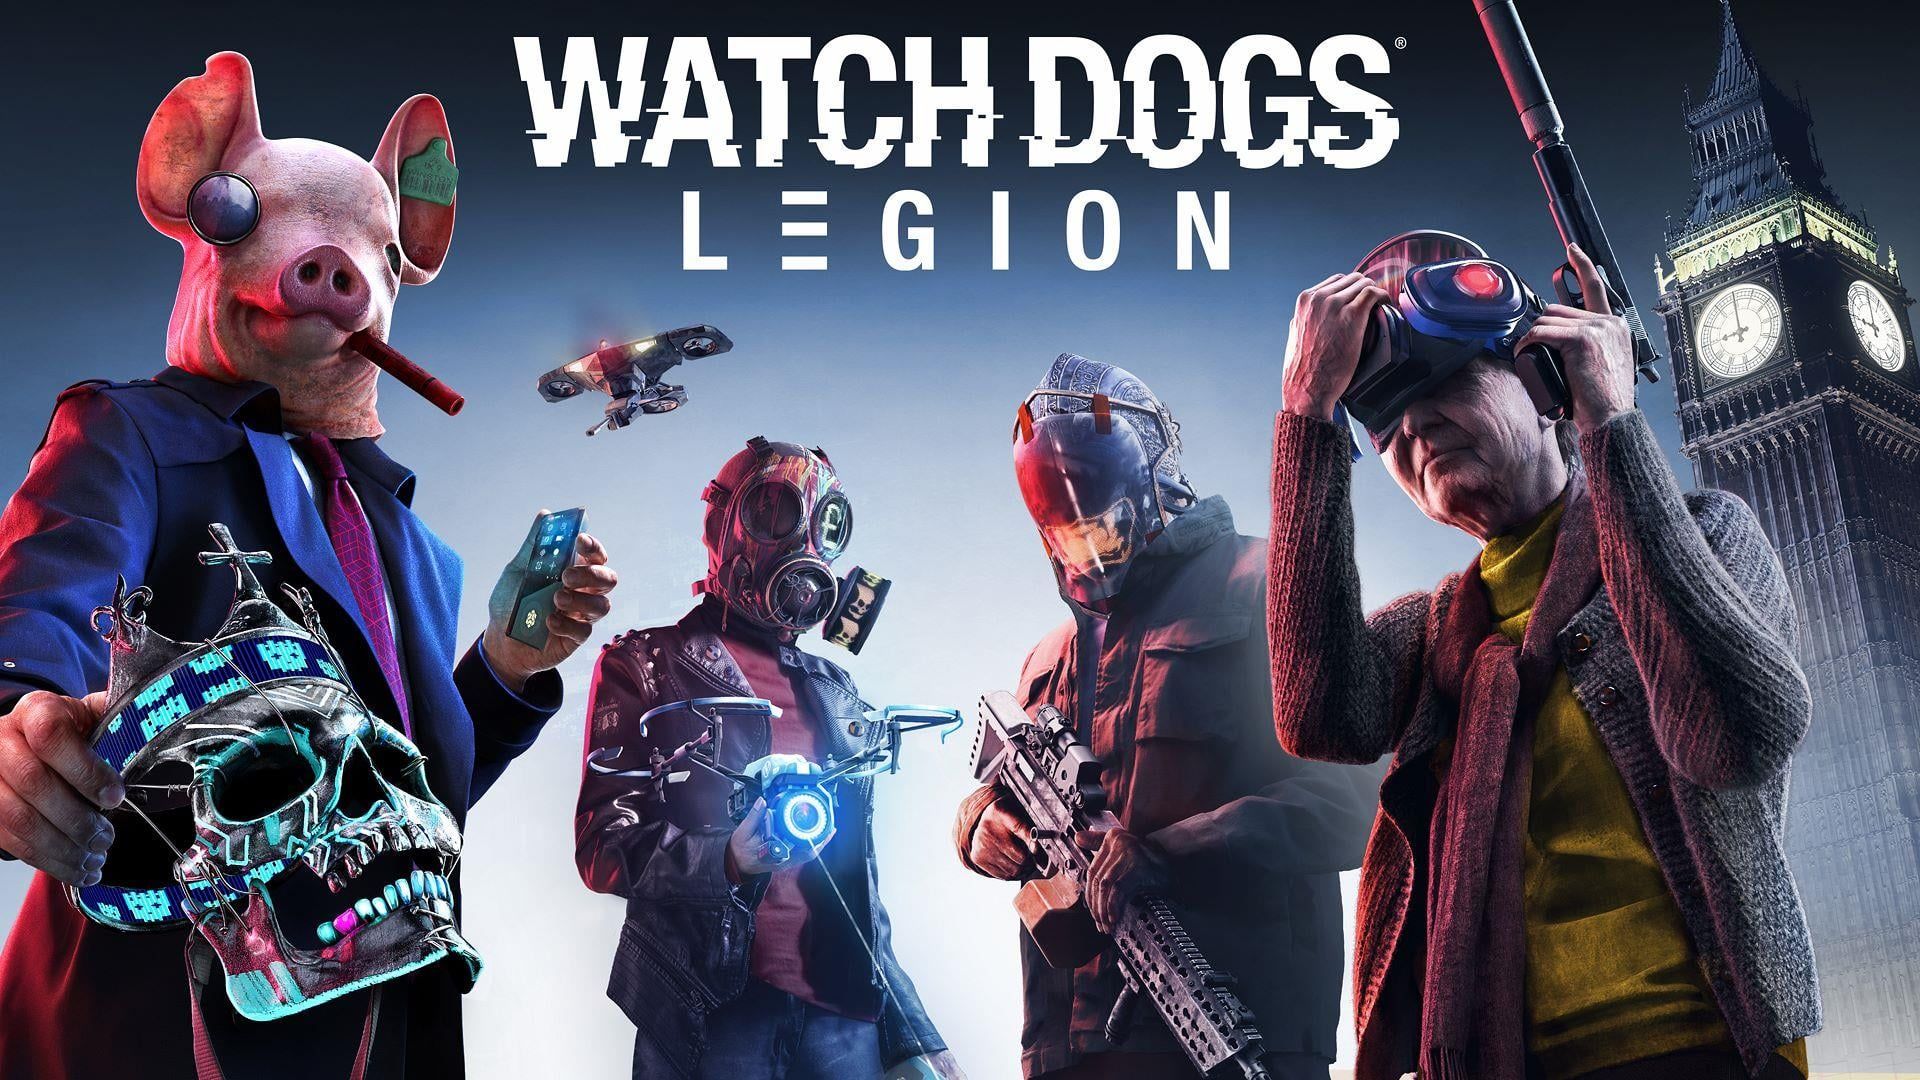 Watch Dogs: Legion review: Hack teh world